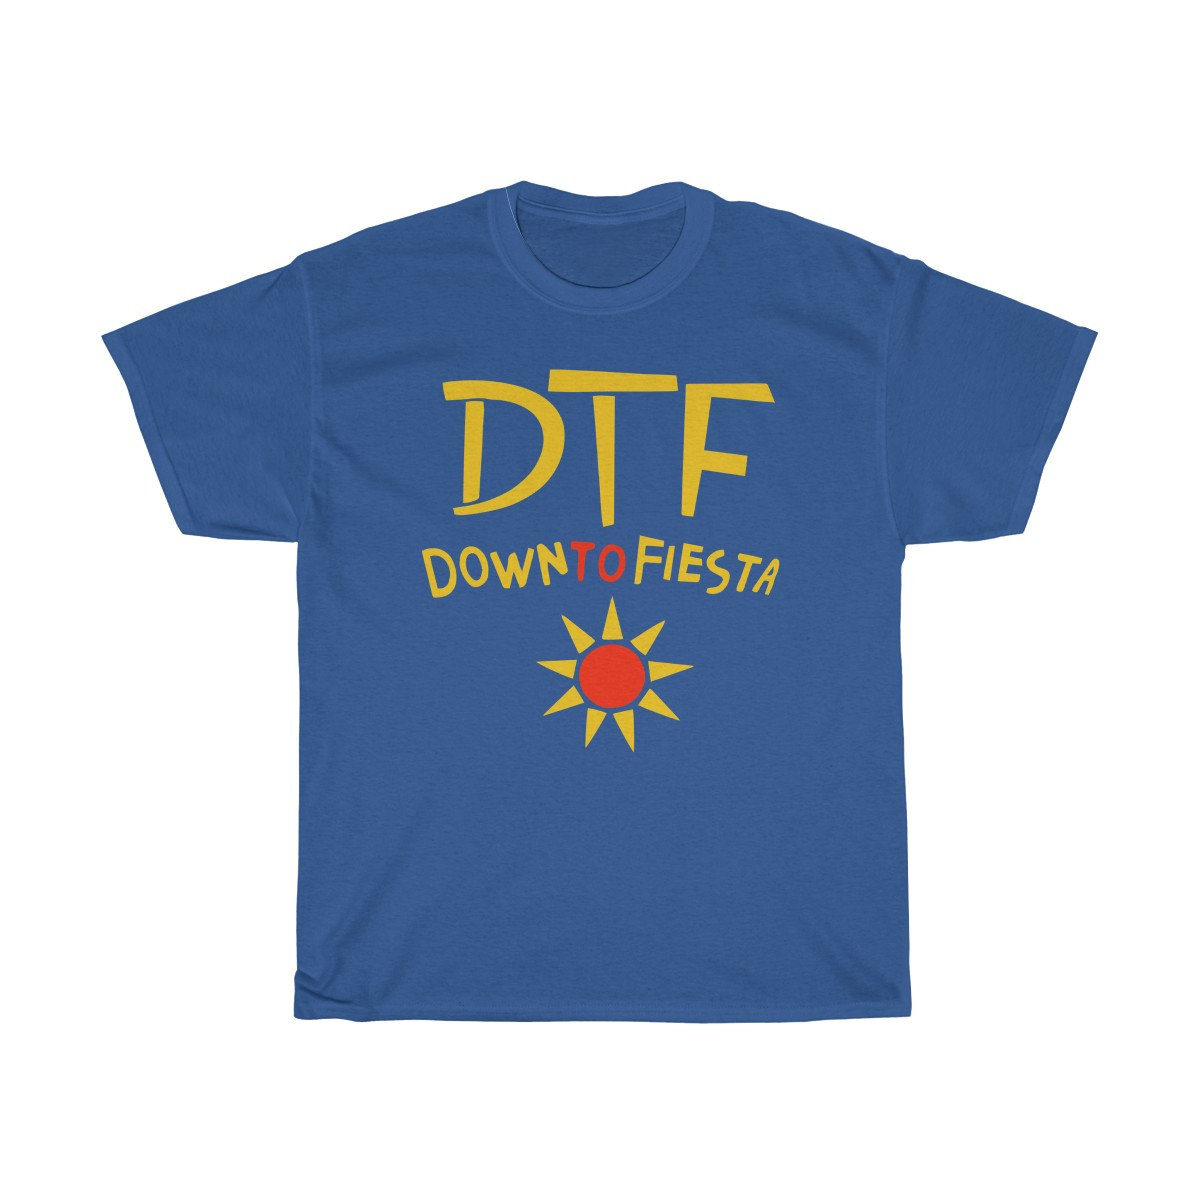 DTF Down to Fiesta Tshirt